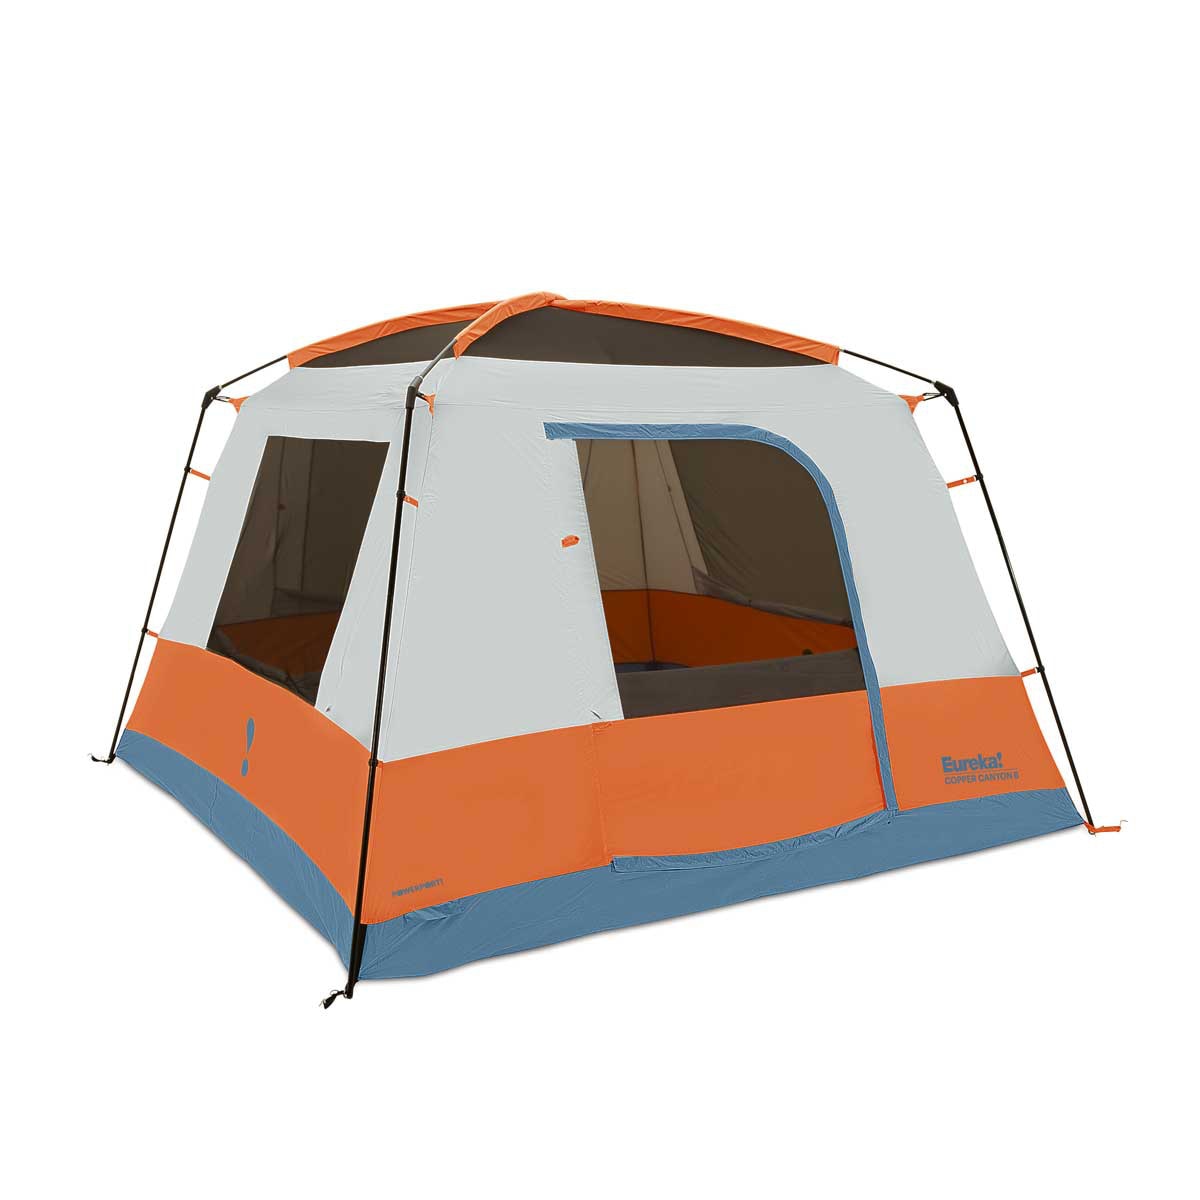 Copper Canyon LX 6 Person Tent